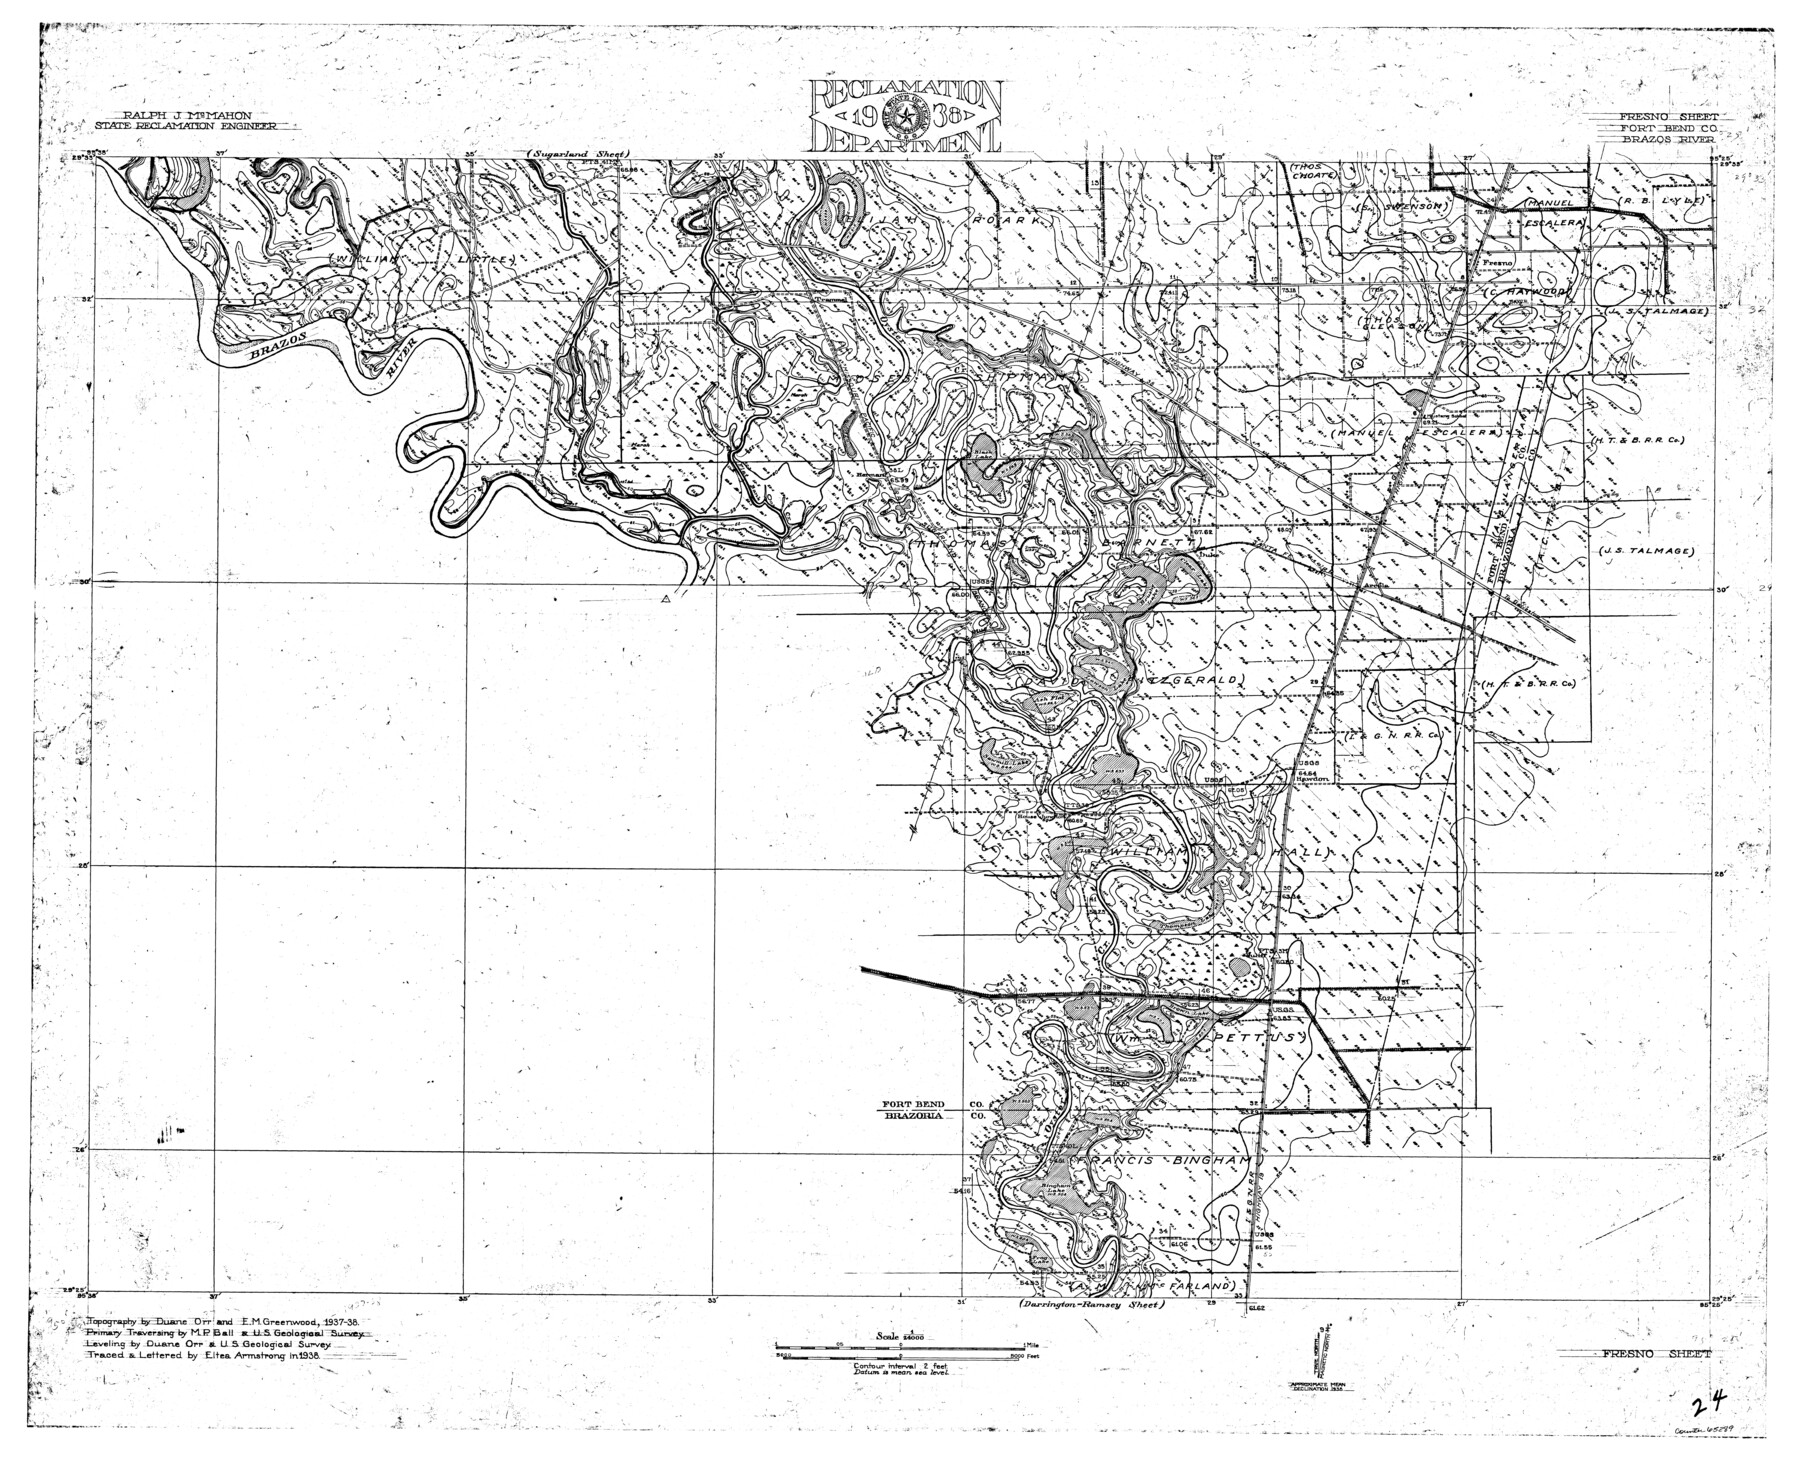 65289, Brazos River, Fresno Sheet, General Map Collection